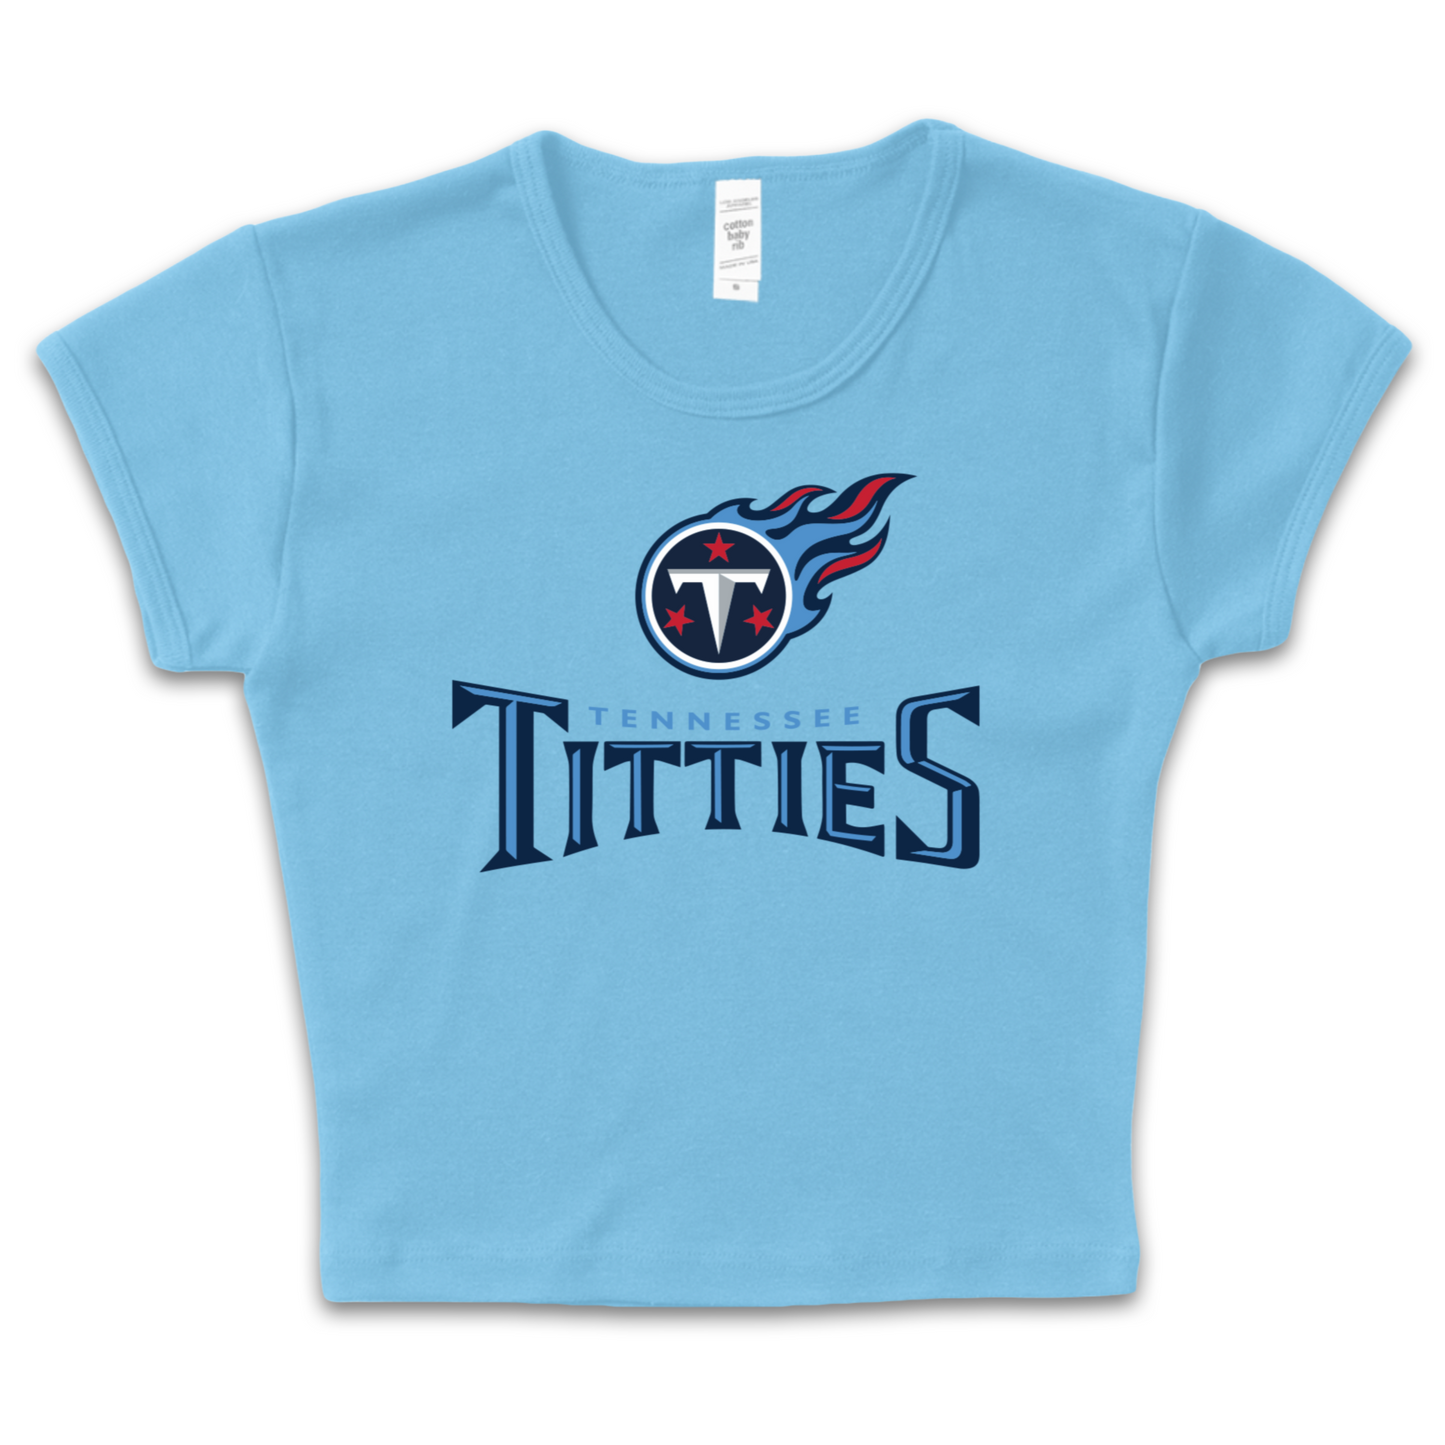 Tennessee Titties Baby Tee